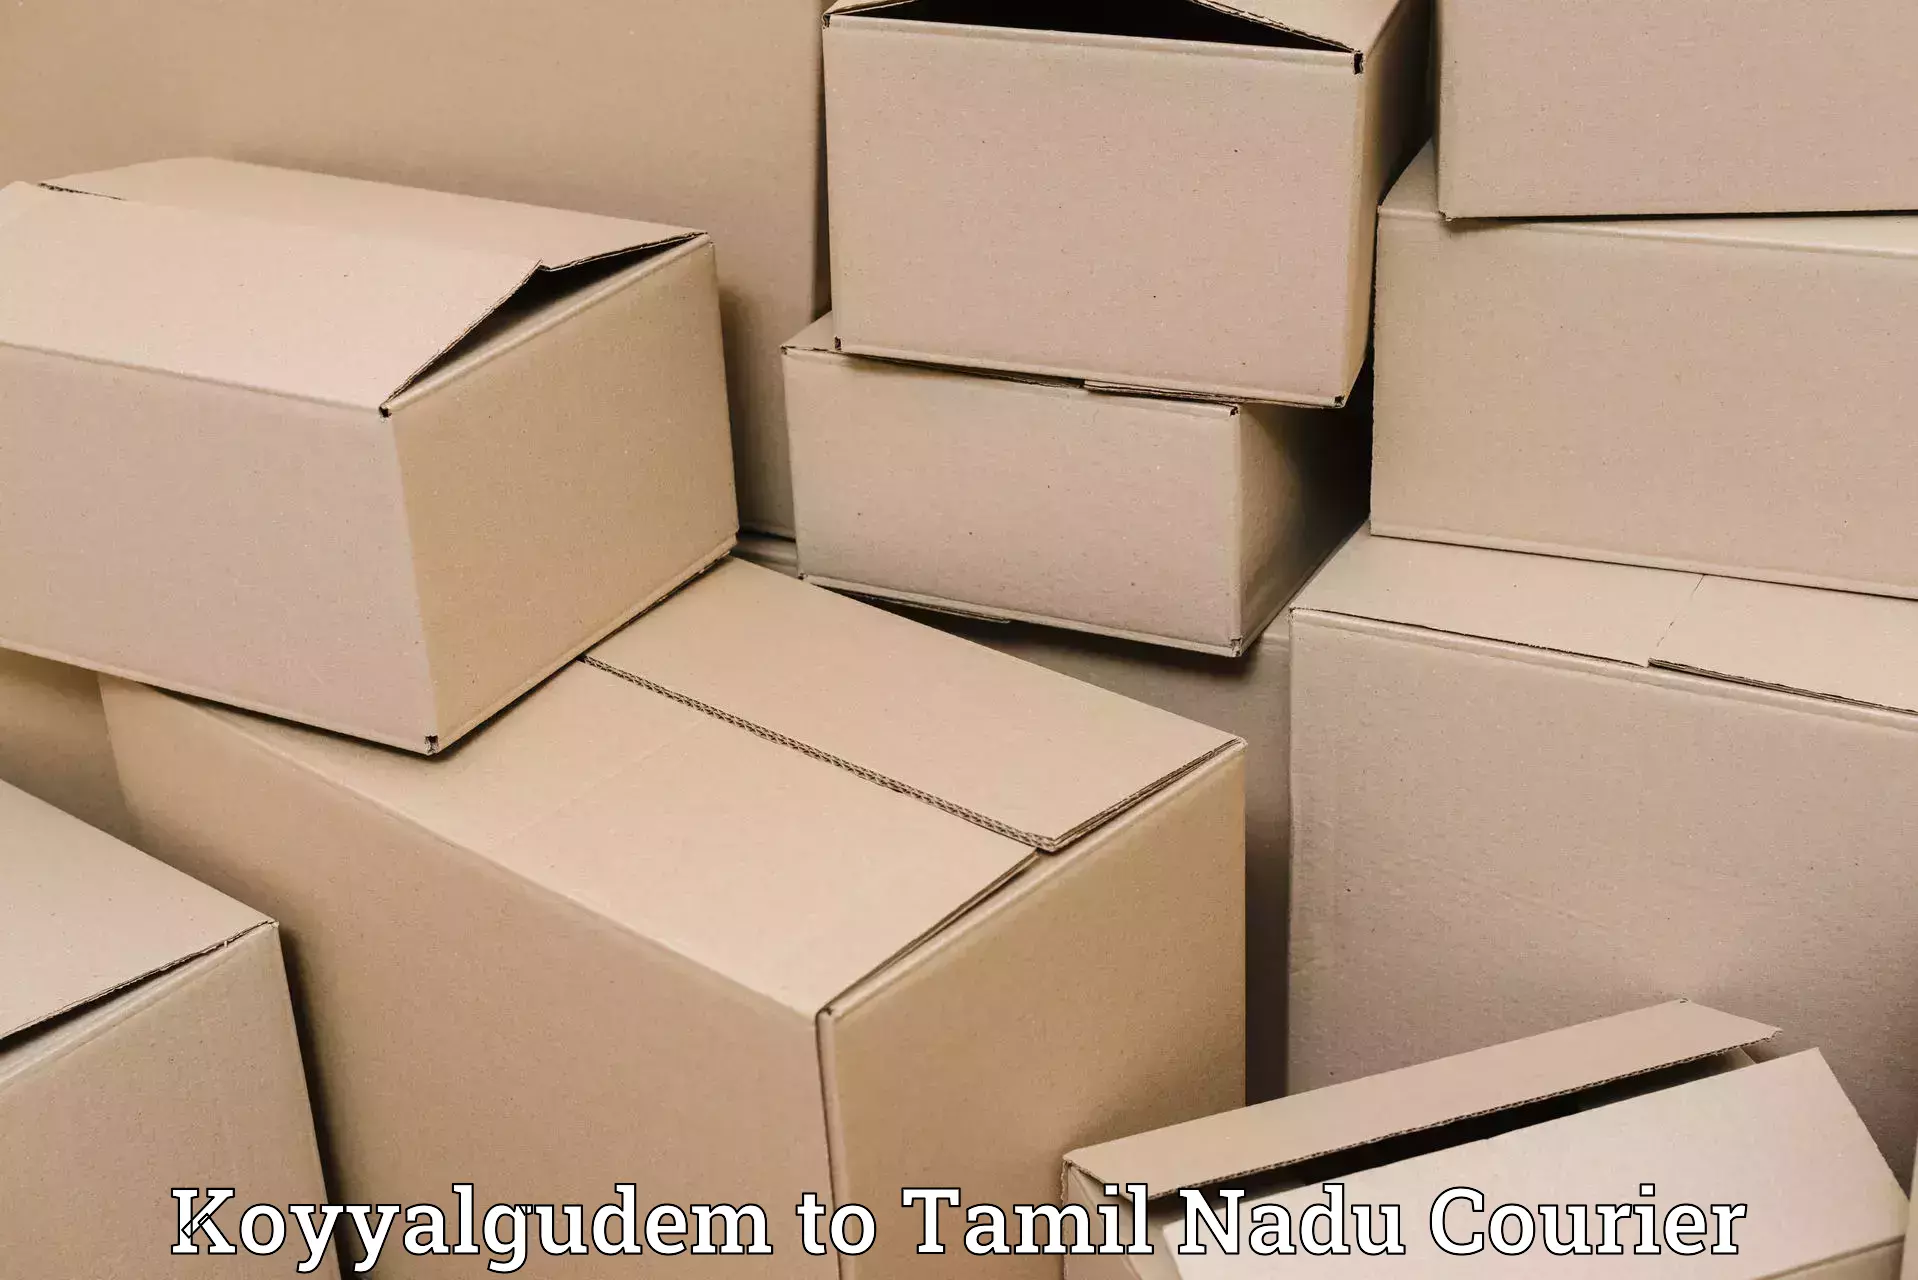 Supply chain delivery Koyyalgudem to Tamil Nadu